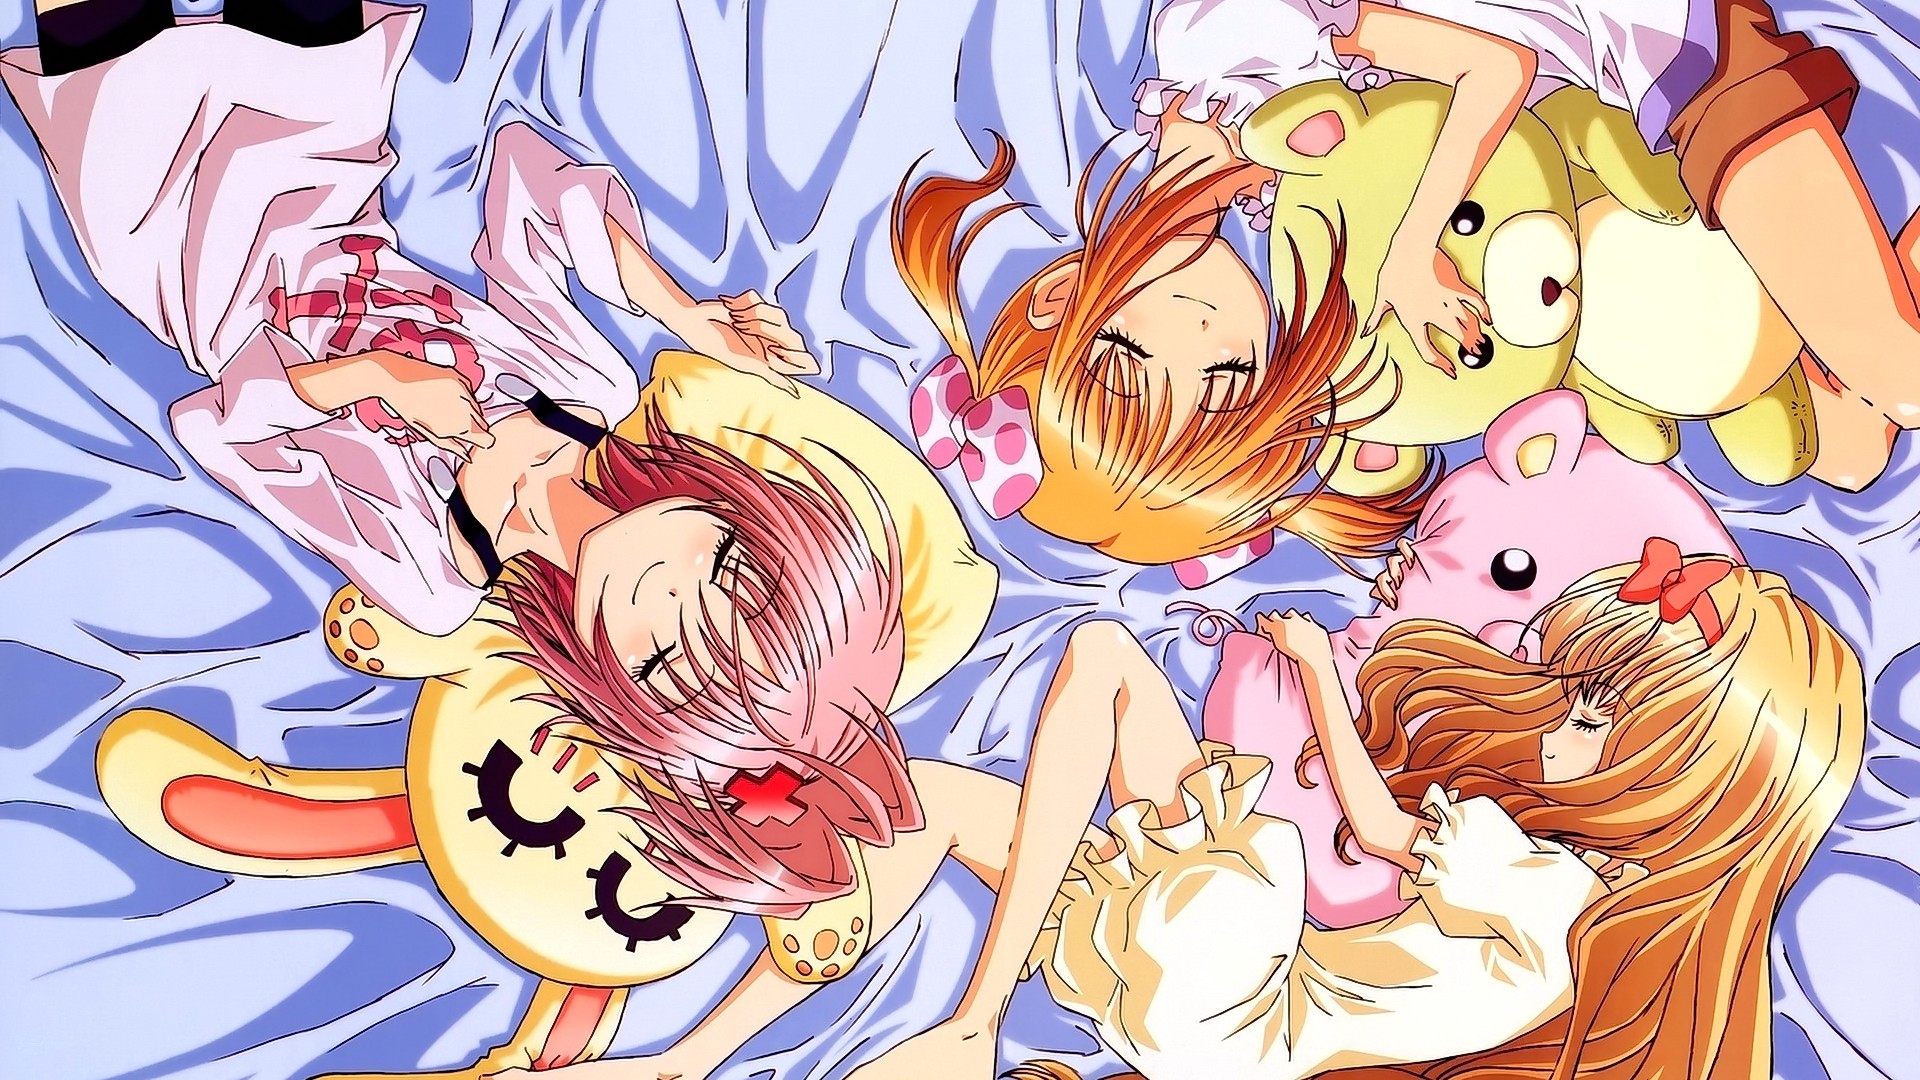 Anime 1920x1080 anime anime girls blonde closed eyes sleeping short hair long hair Shugo Chara Hinamori Amu women trio lying down teddy bears plush toy pink hair